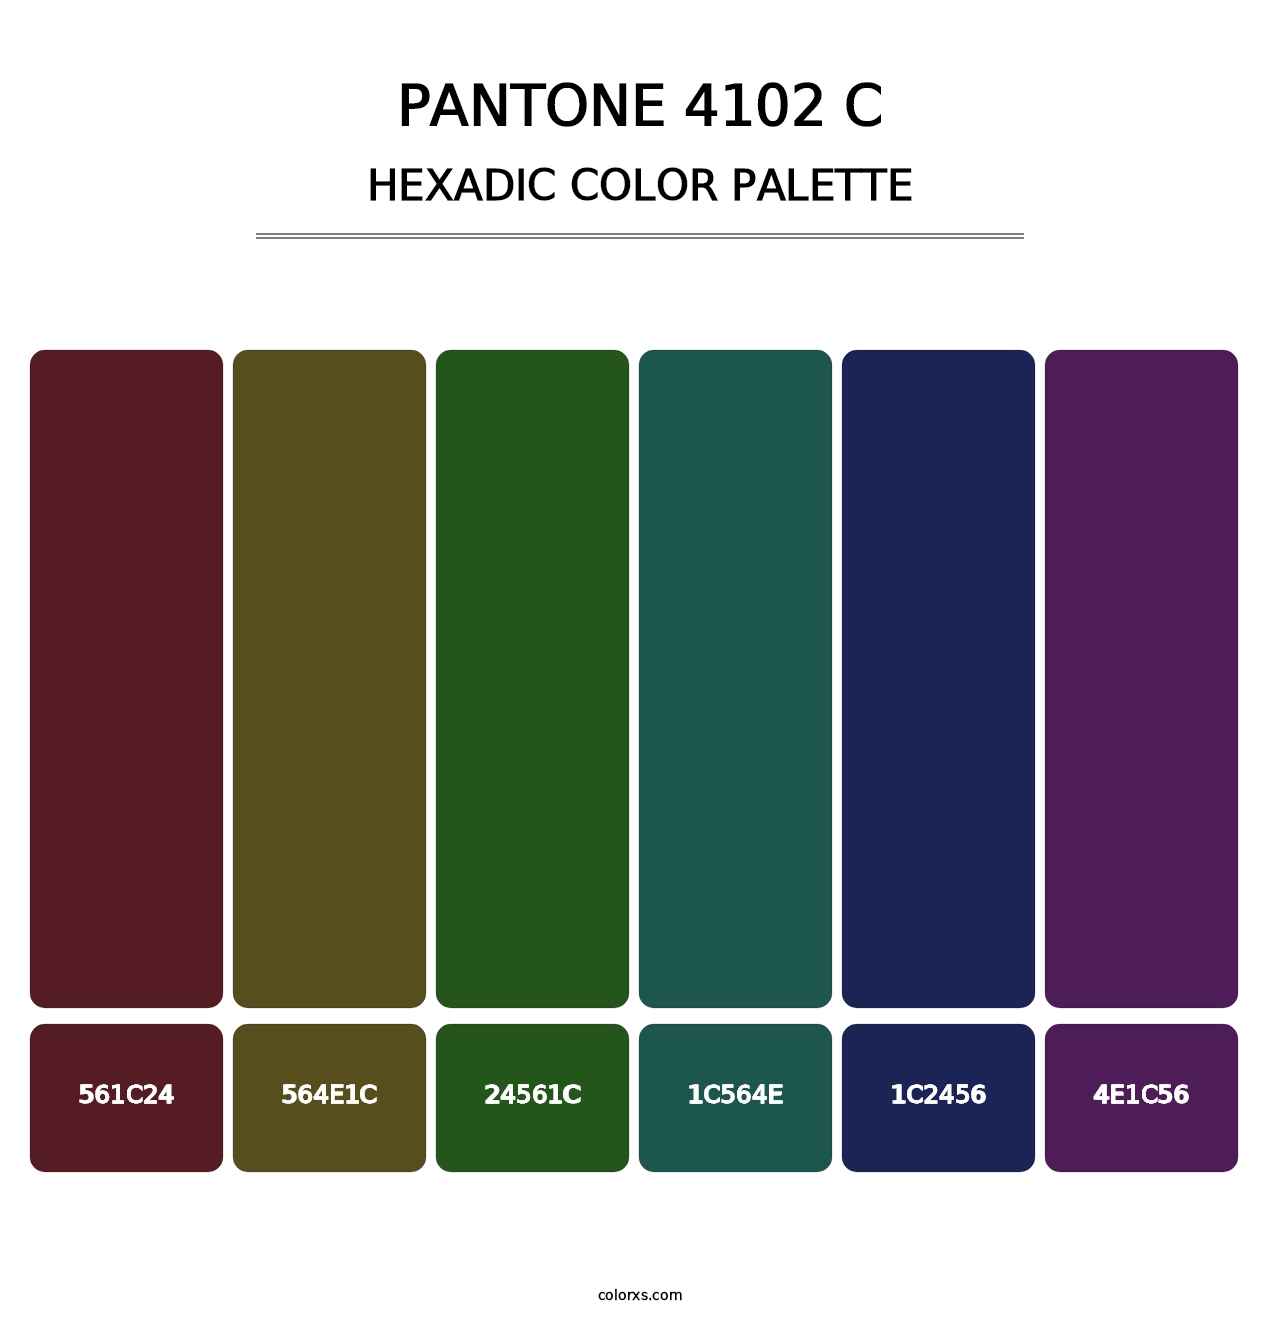 PANTONE 4102 C - Hexadic Color Palette